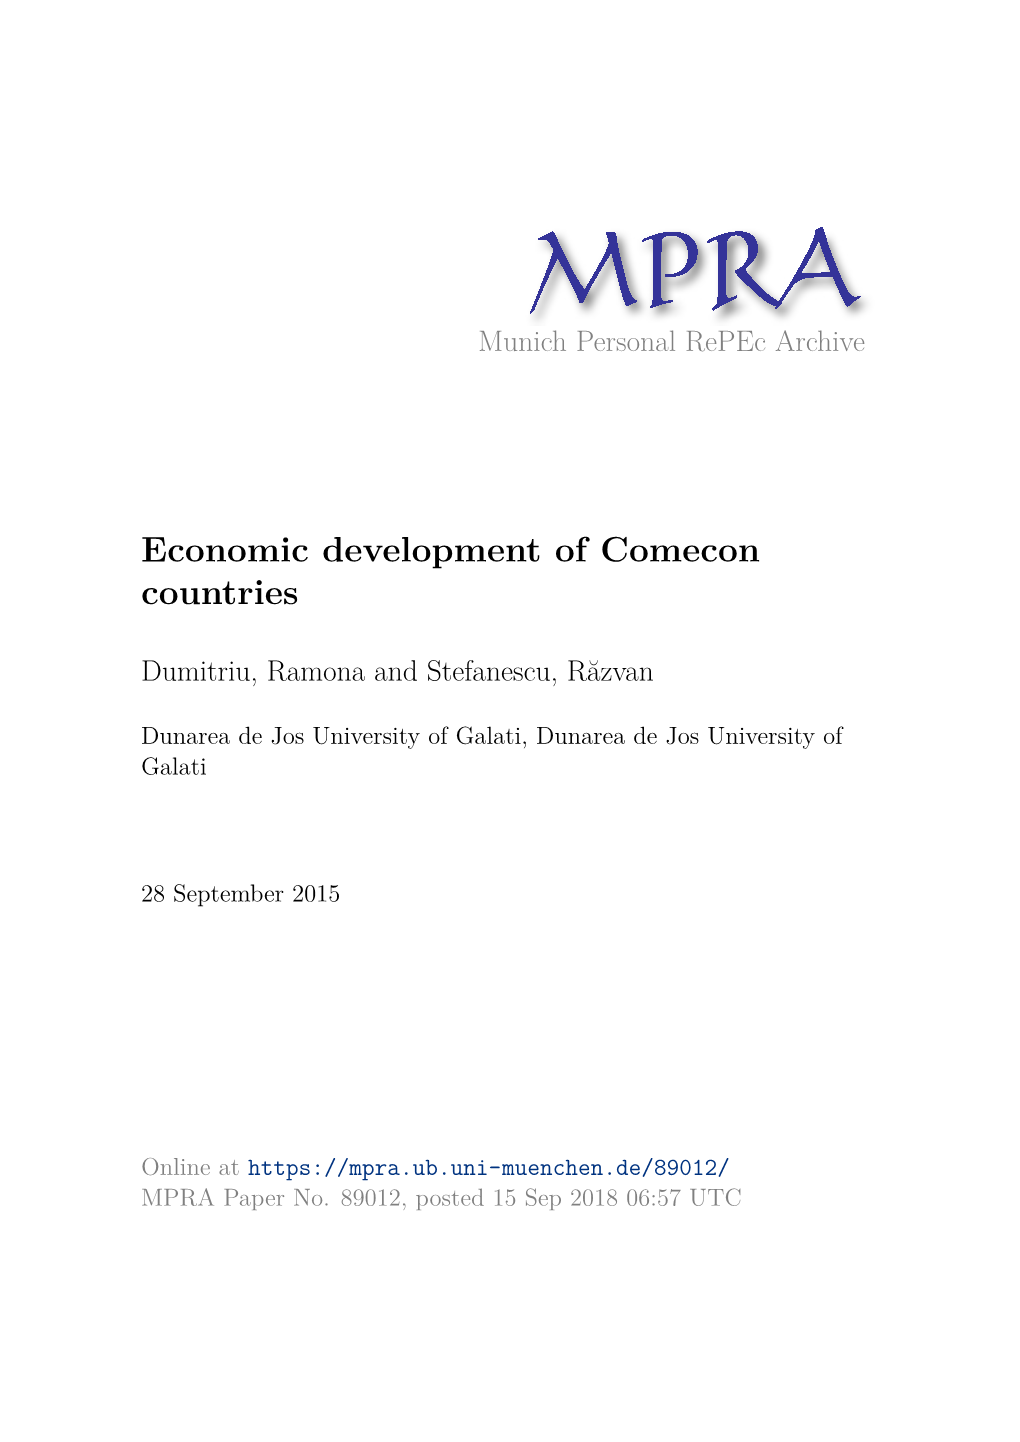 Economic Development of Comecon Countries